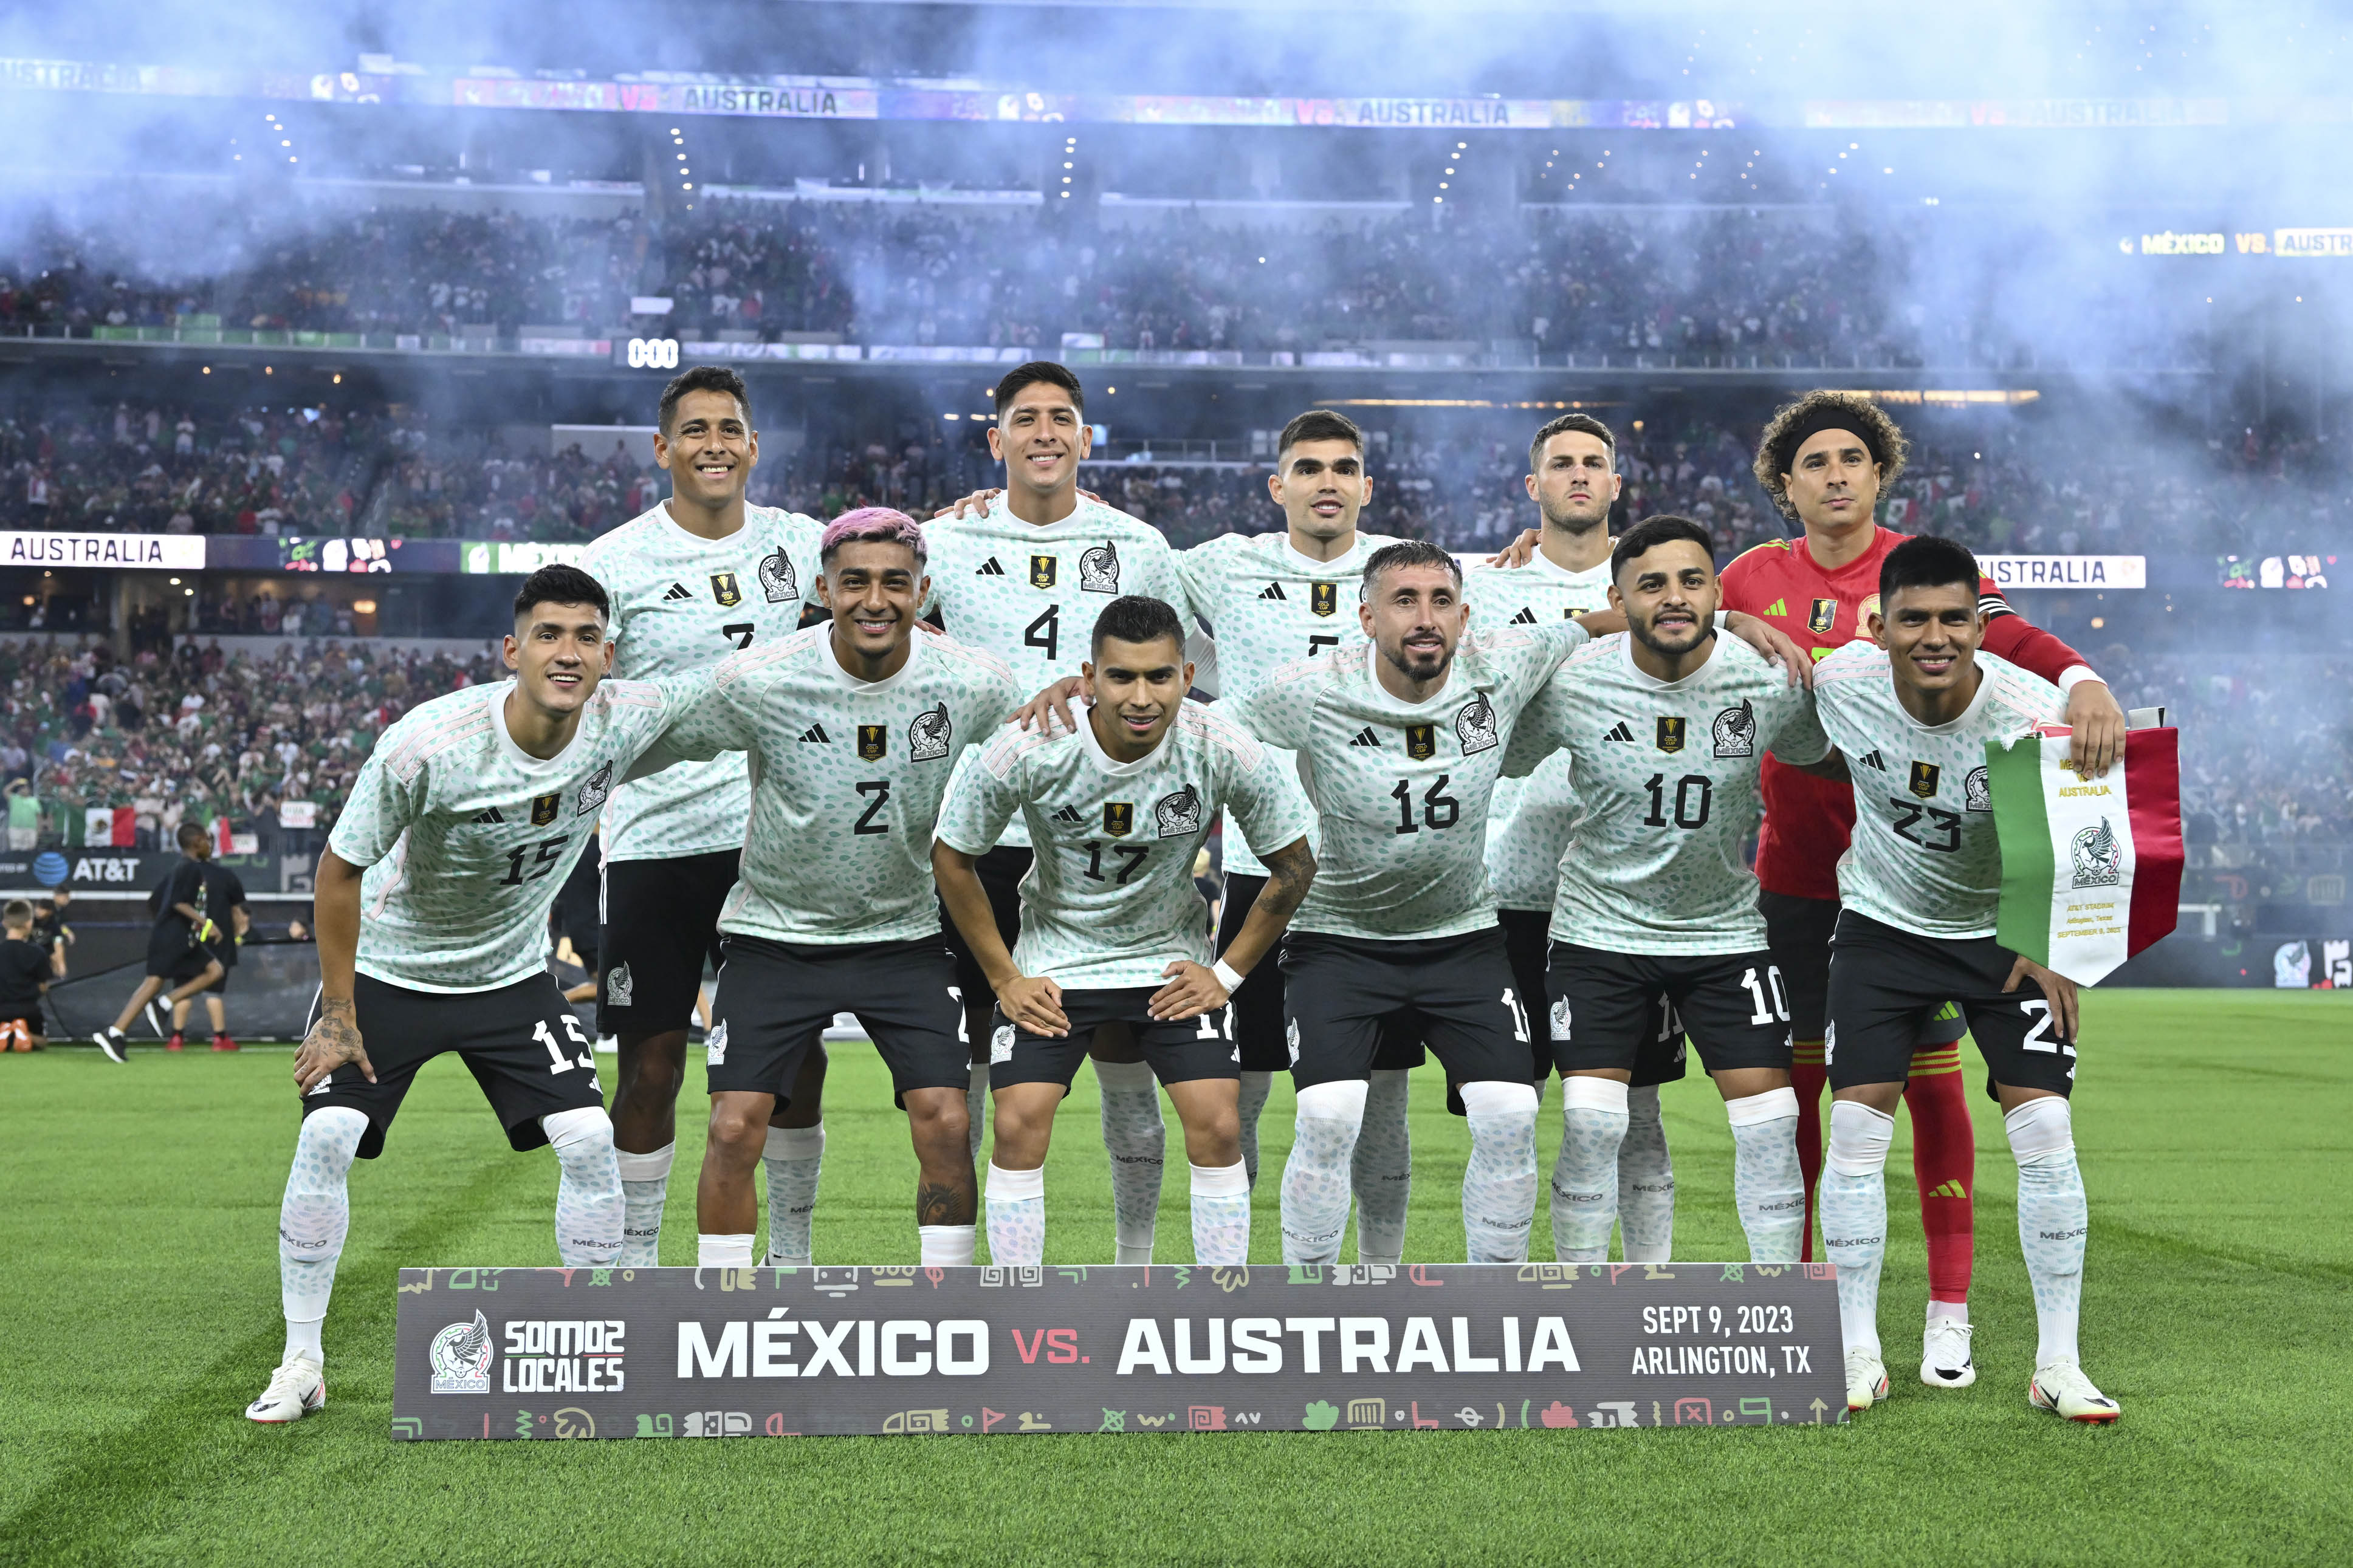 Mexican Vs. Australian National Football Team